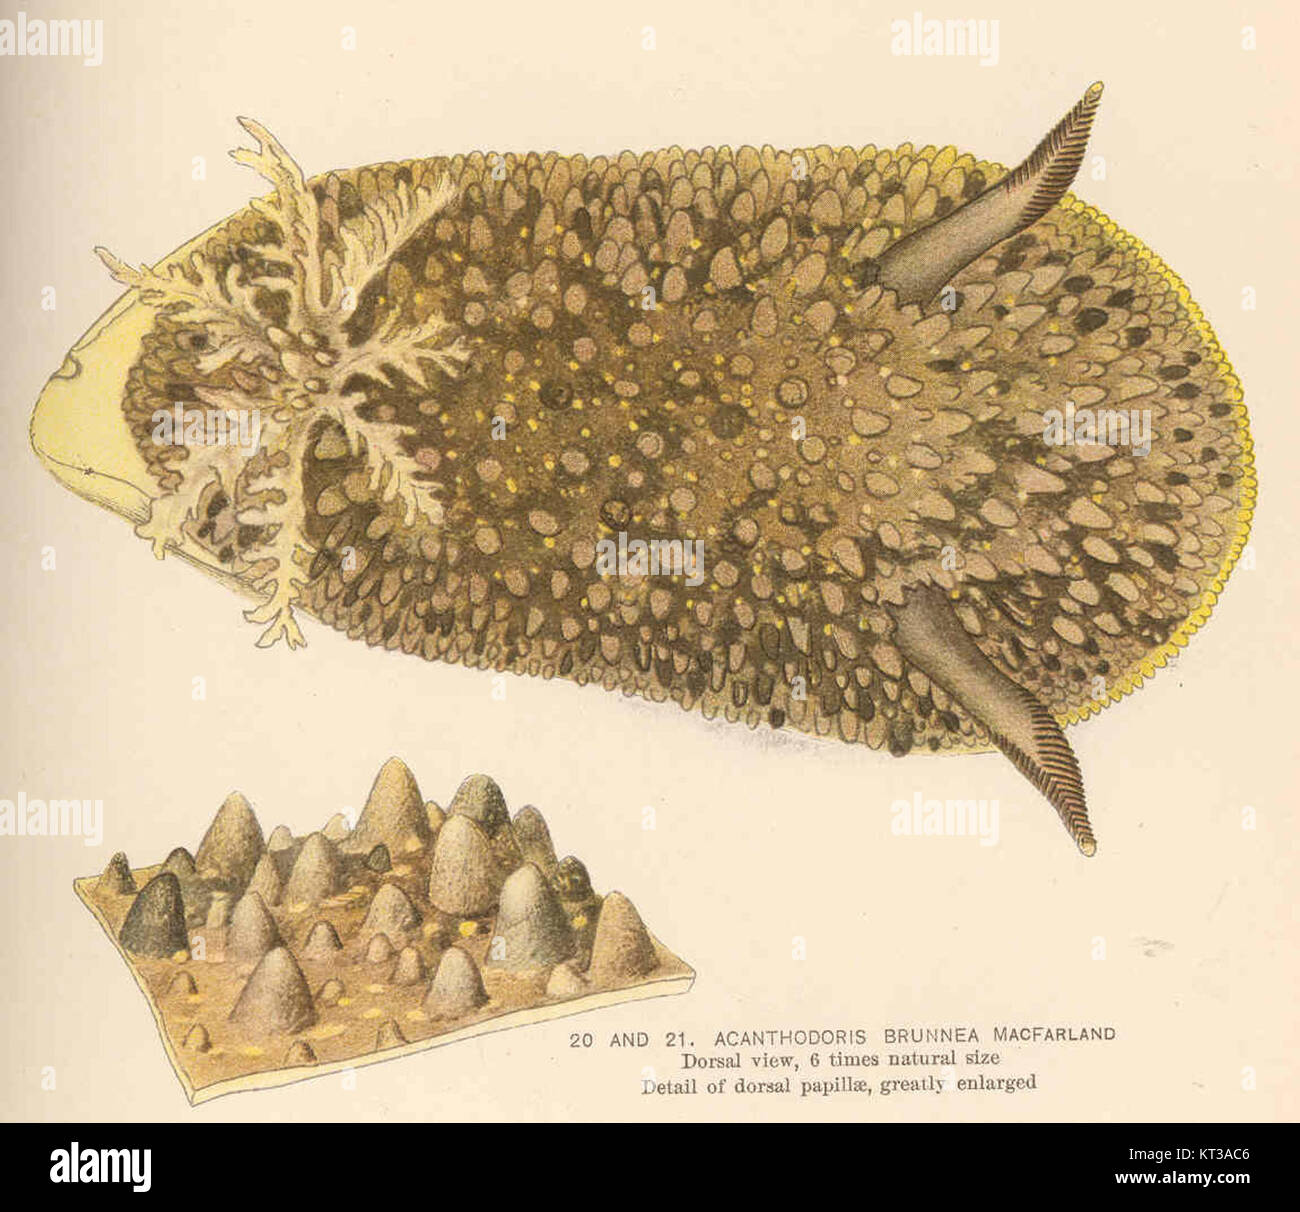 39593 Acanthodoris brunea MacFarland Dorsal viewand Detail of dorsal papillae, greatly enlarged Stock Photo